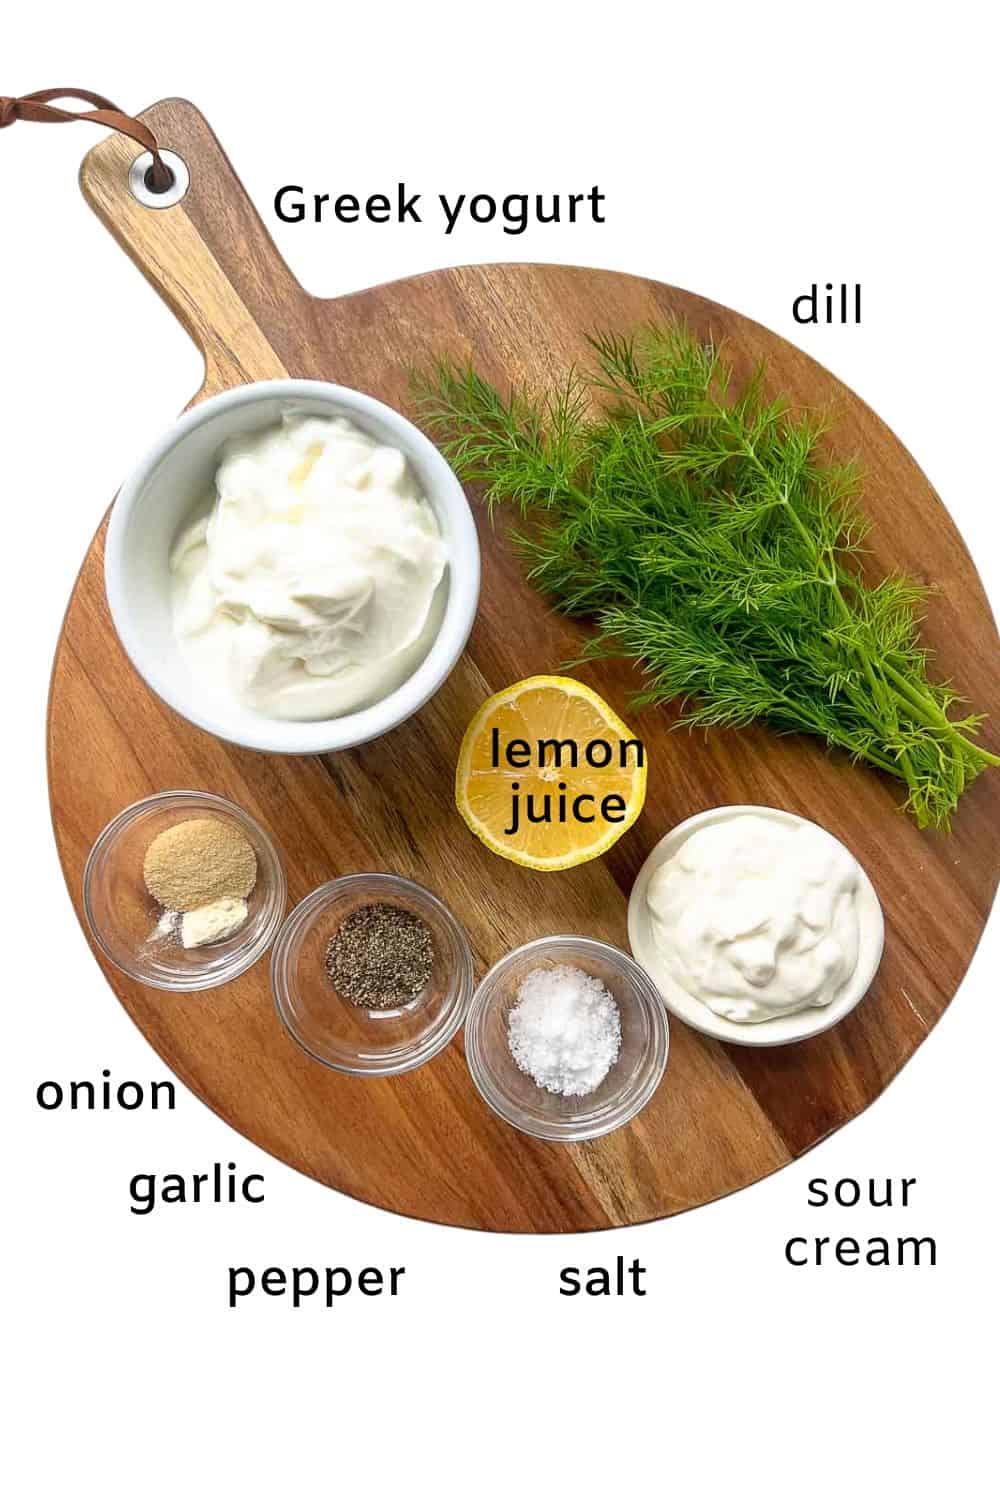 Ingredients for dill dip with labels reading Greek yogurt, dill, lemon juice, sour cream, salt, pepper, onion and garlic powder.